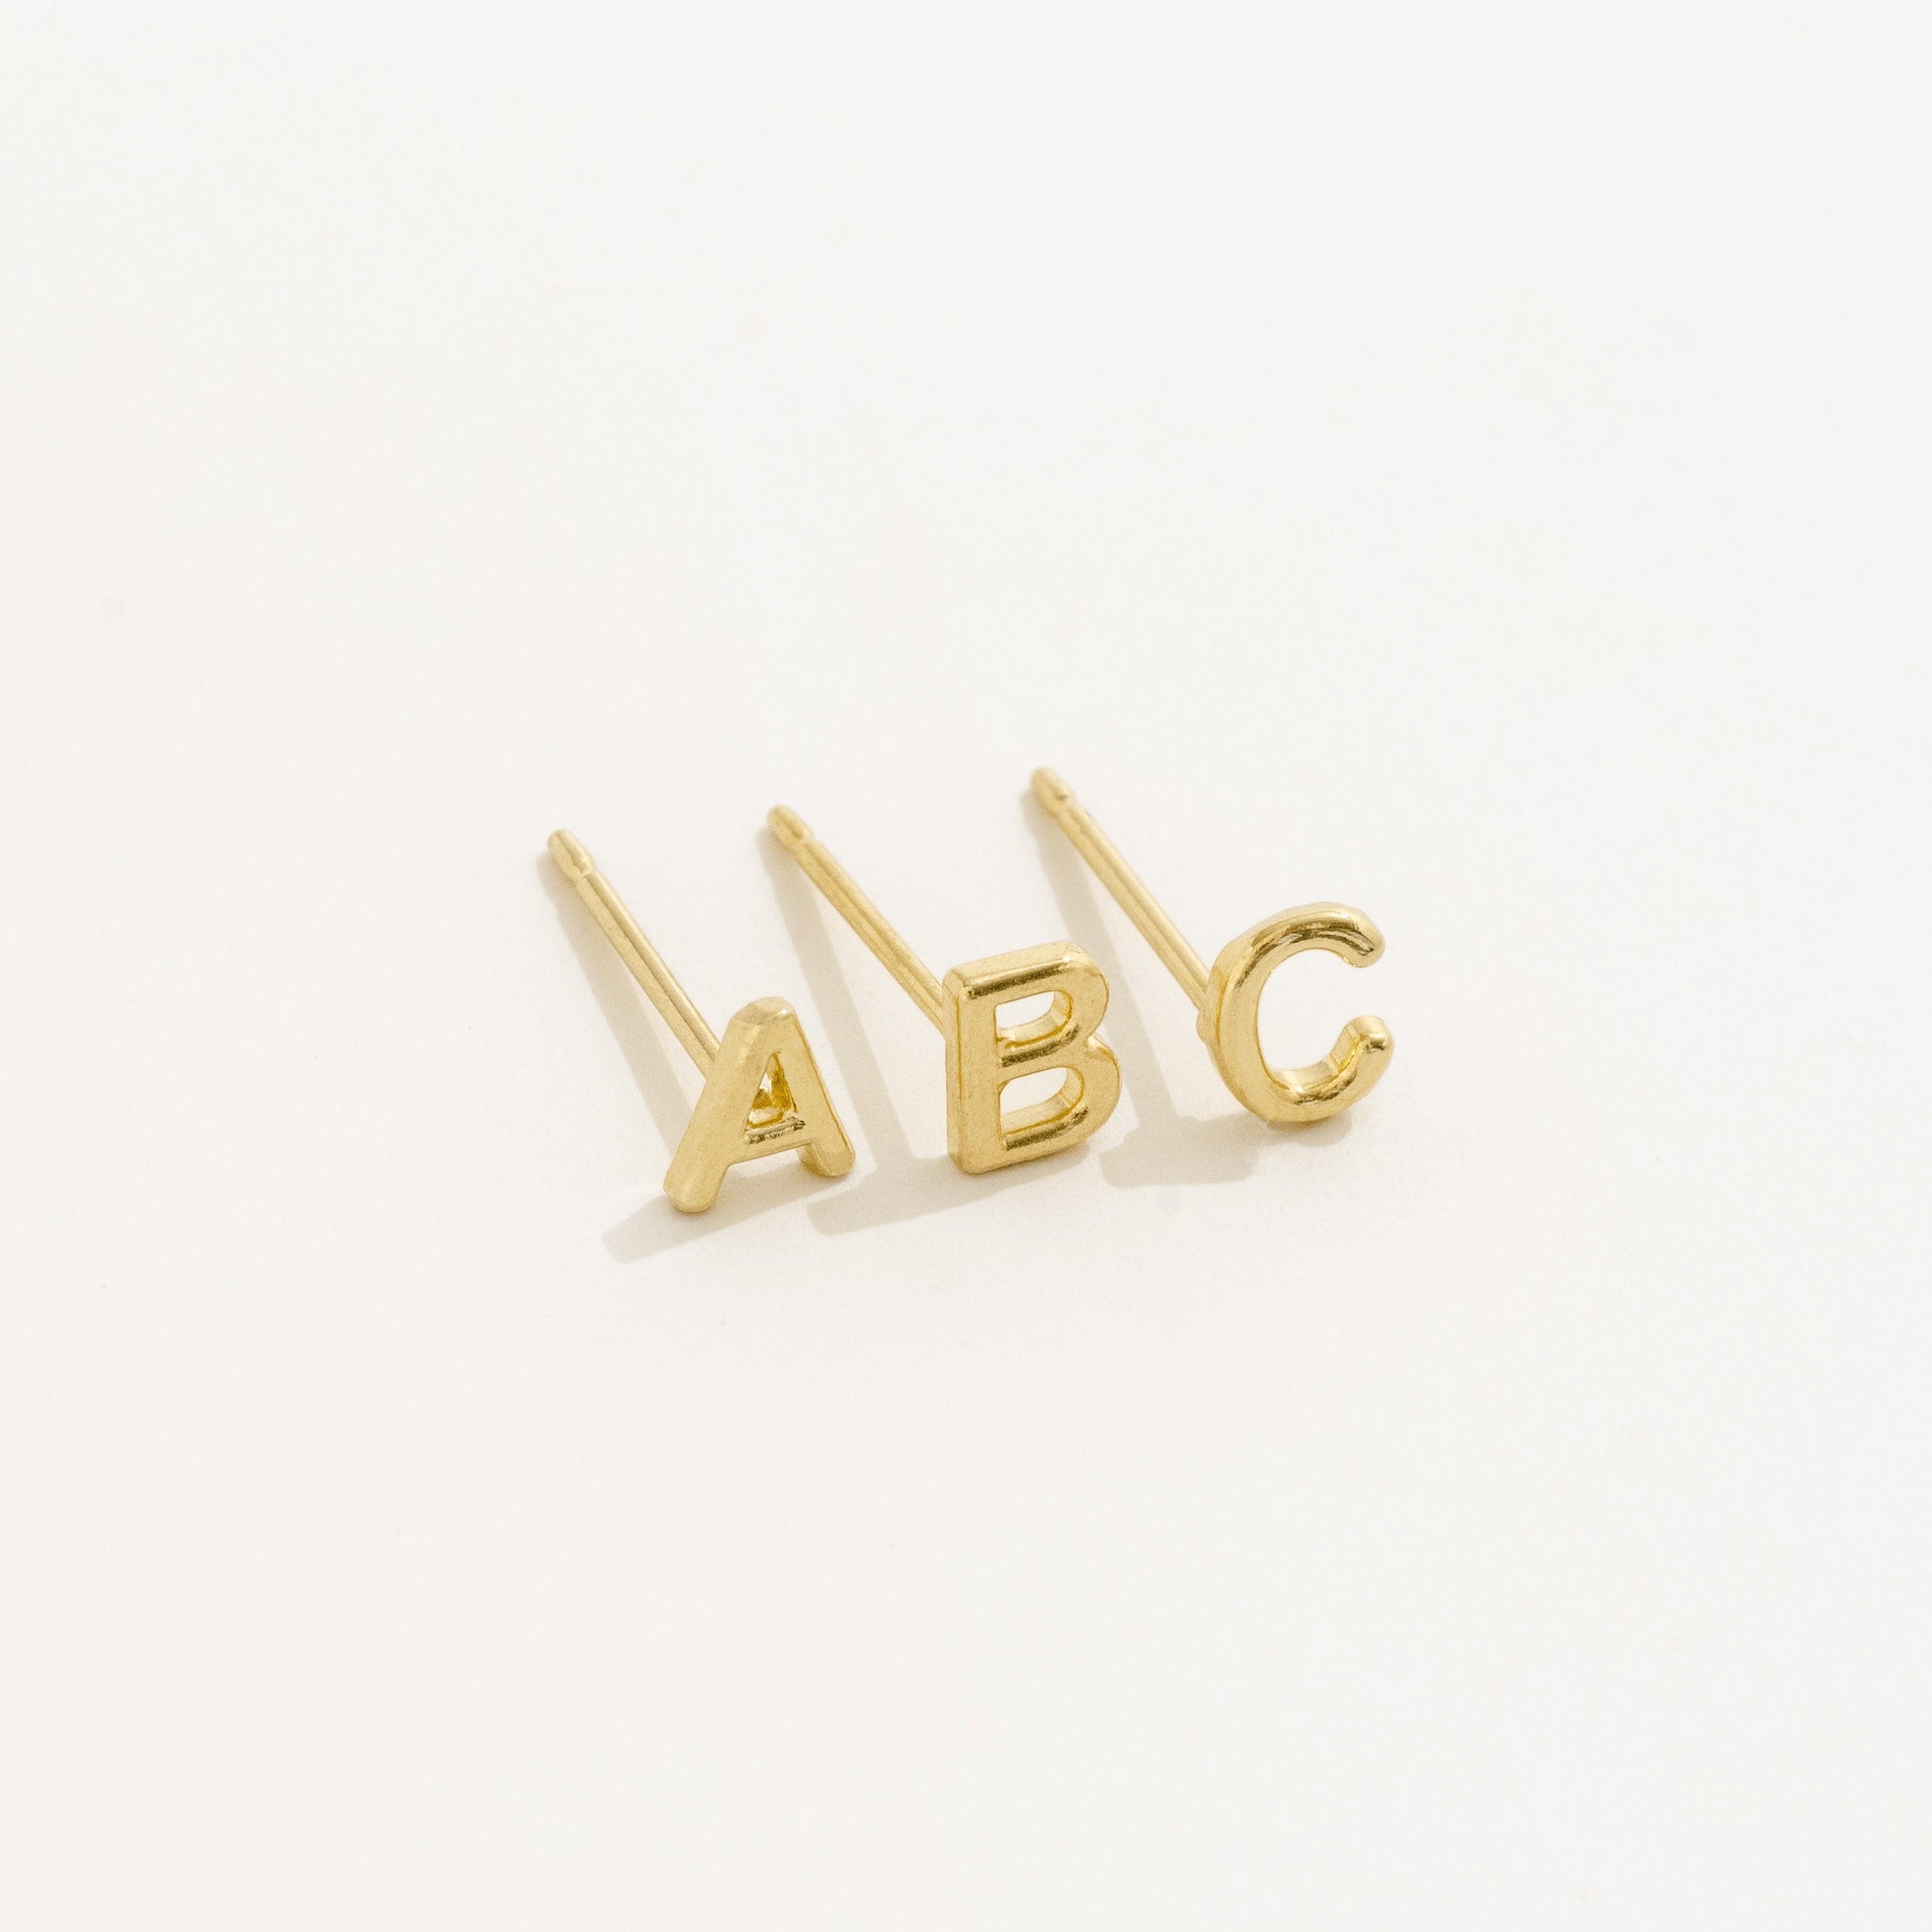 A B C Initial Studs by Katie Dean Jewelry Dean Jewelry made in America